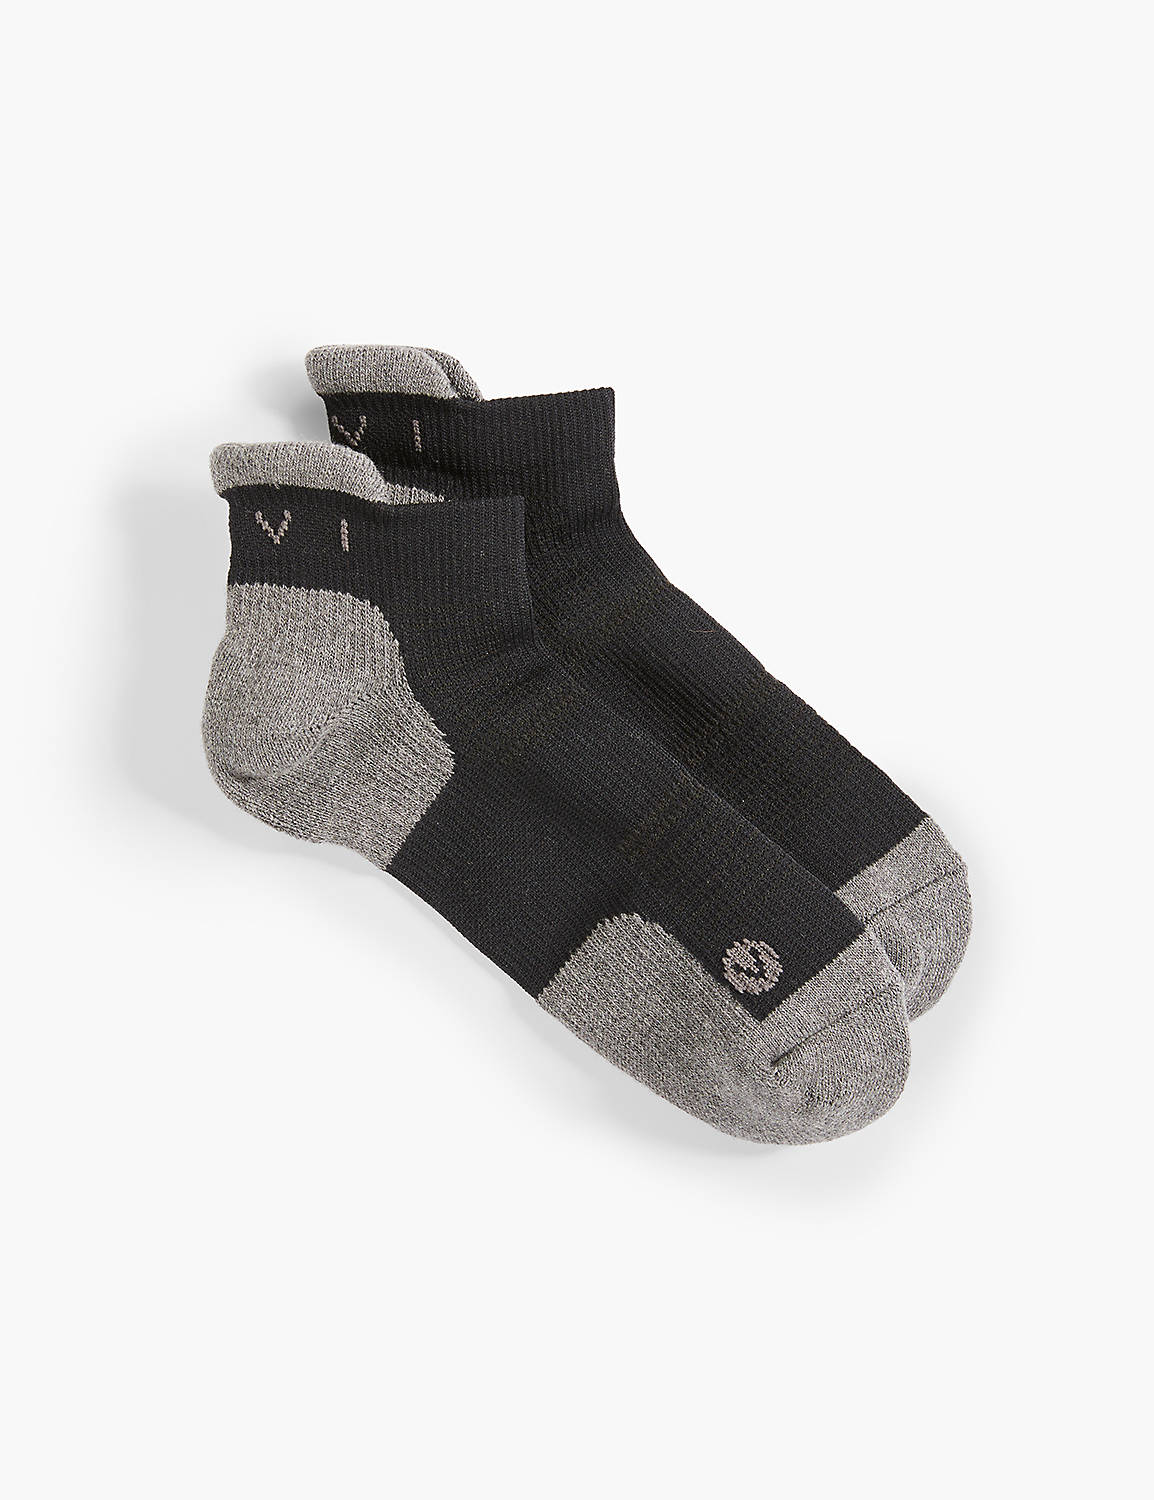 Livi Wicking Black & Grey Sock Product Image 1